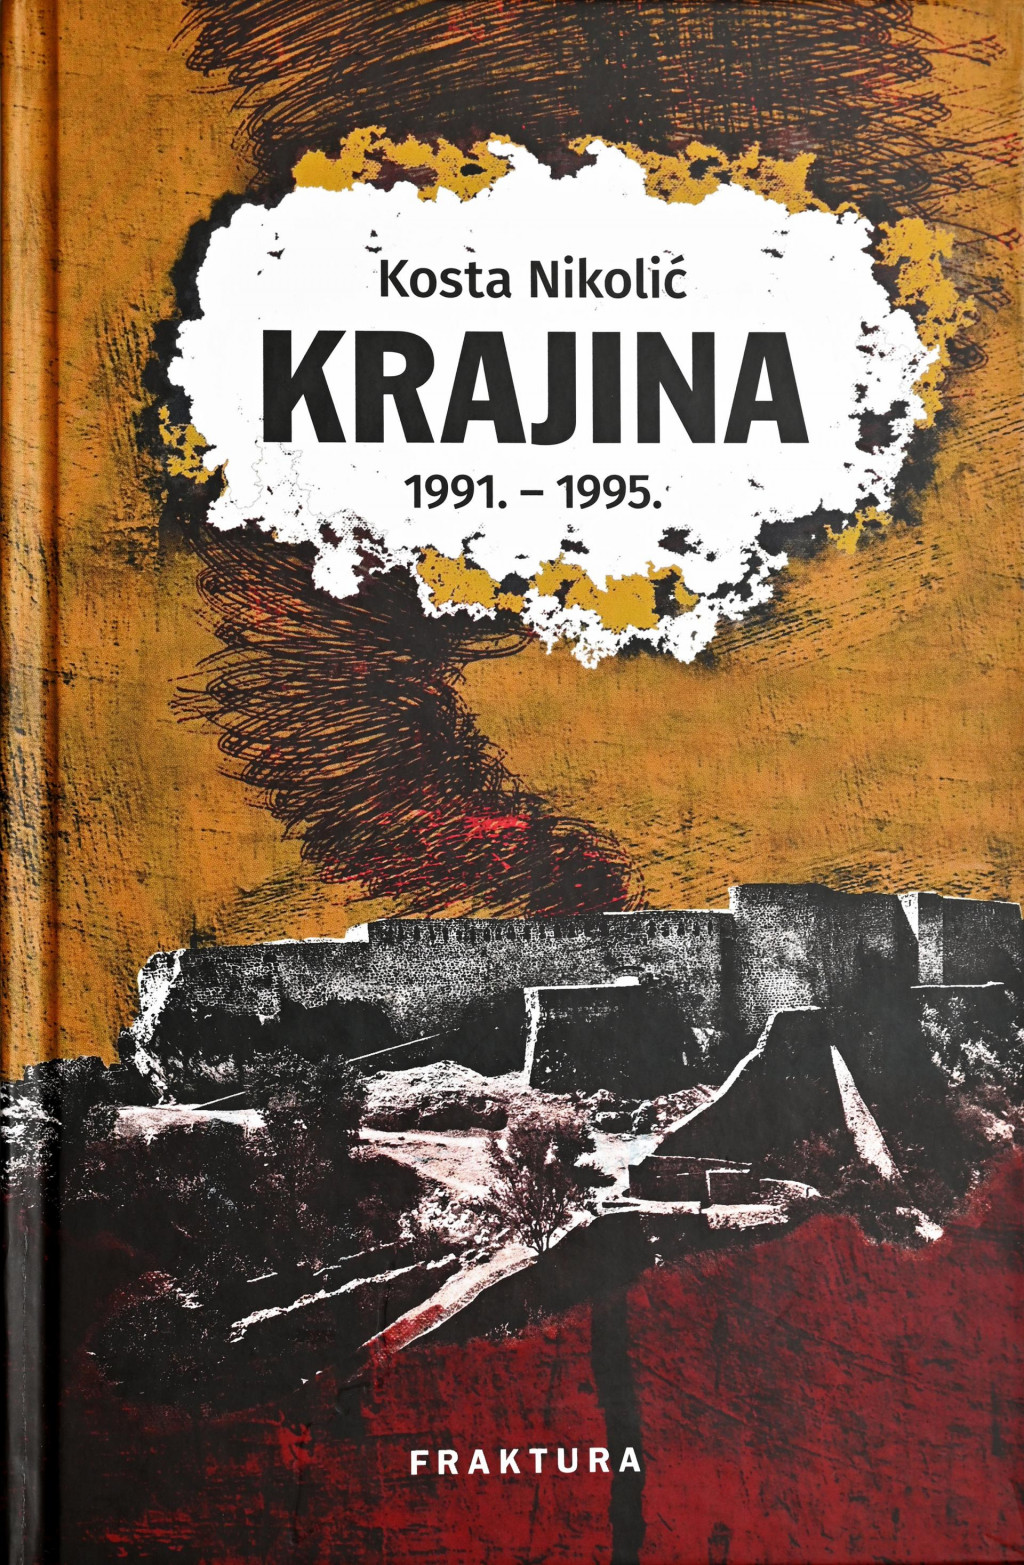 &lt;p&gt;Naslovnica knjige ‘Krajina 1991. – 1995.‘ Koste Nikolića, objavljene u izdanju Frakture&lt;/p&gt;